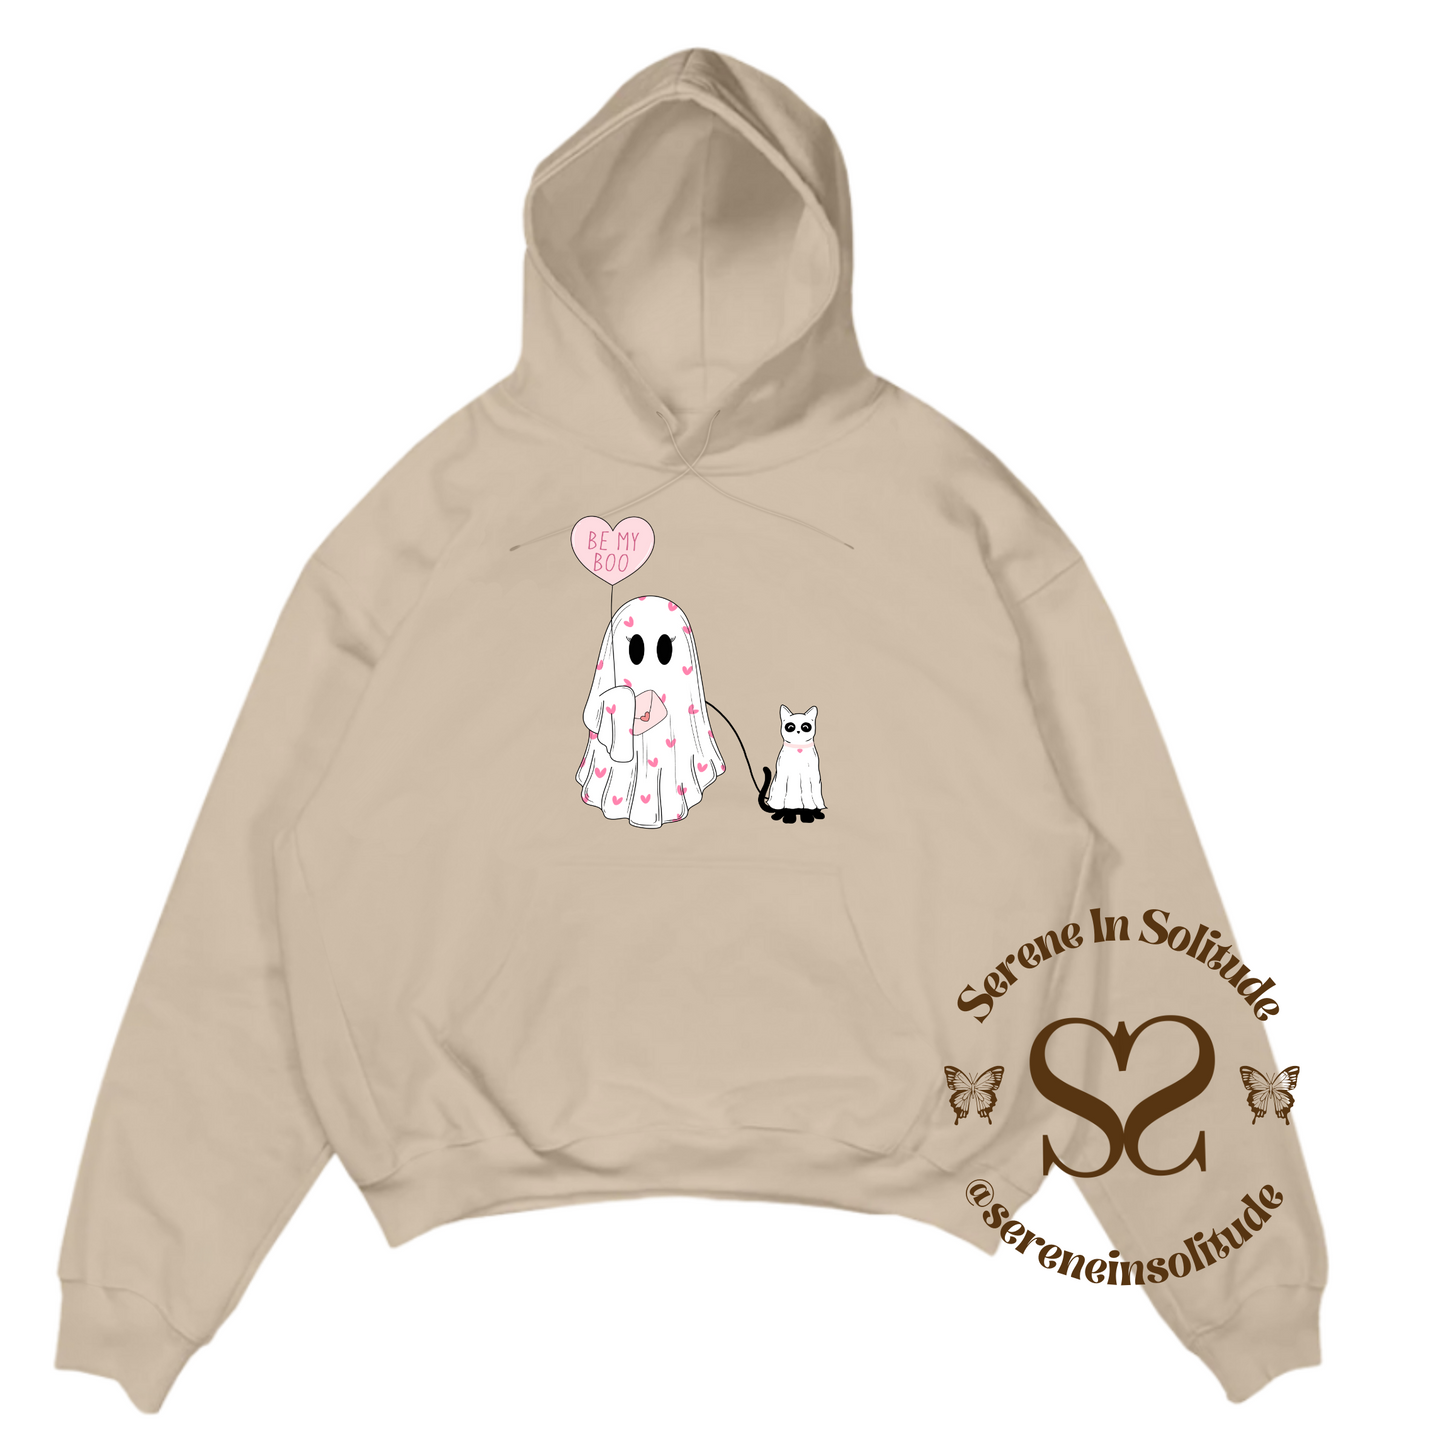 Be My Boo Cat Lover Sweatshirt